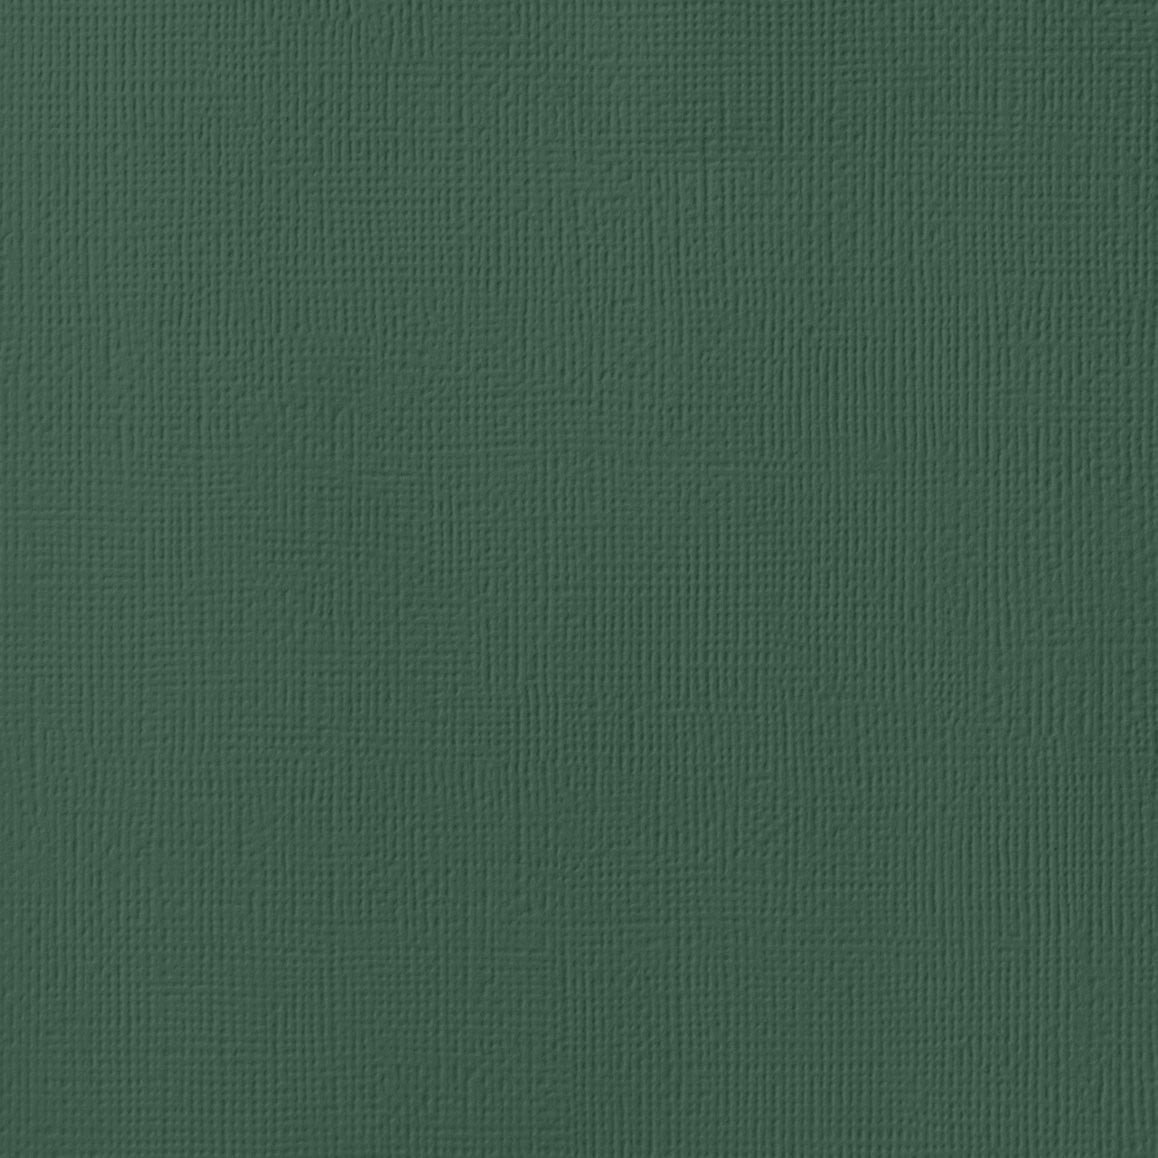 PINE Green Cardstock - 12x12 inch - 80 lb - textured scrapbook paper - American Crafts